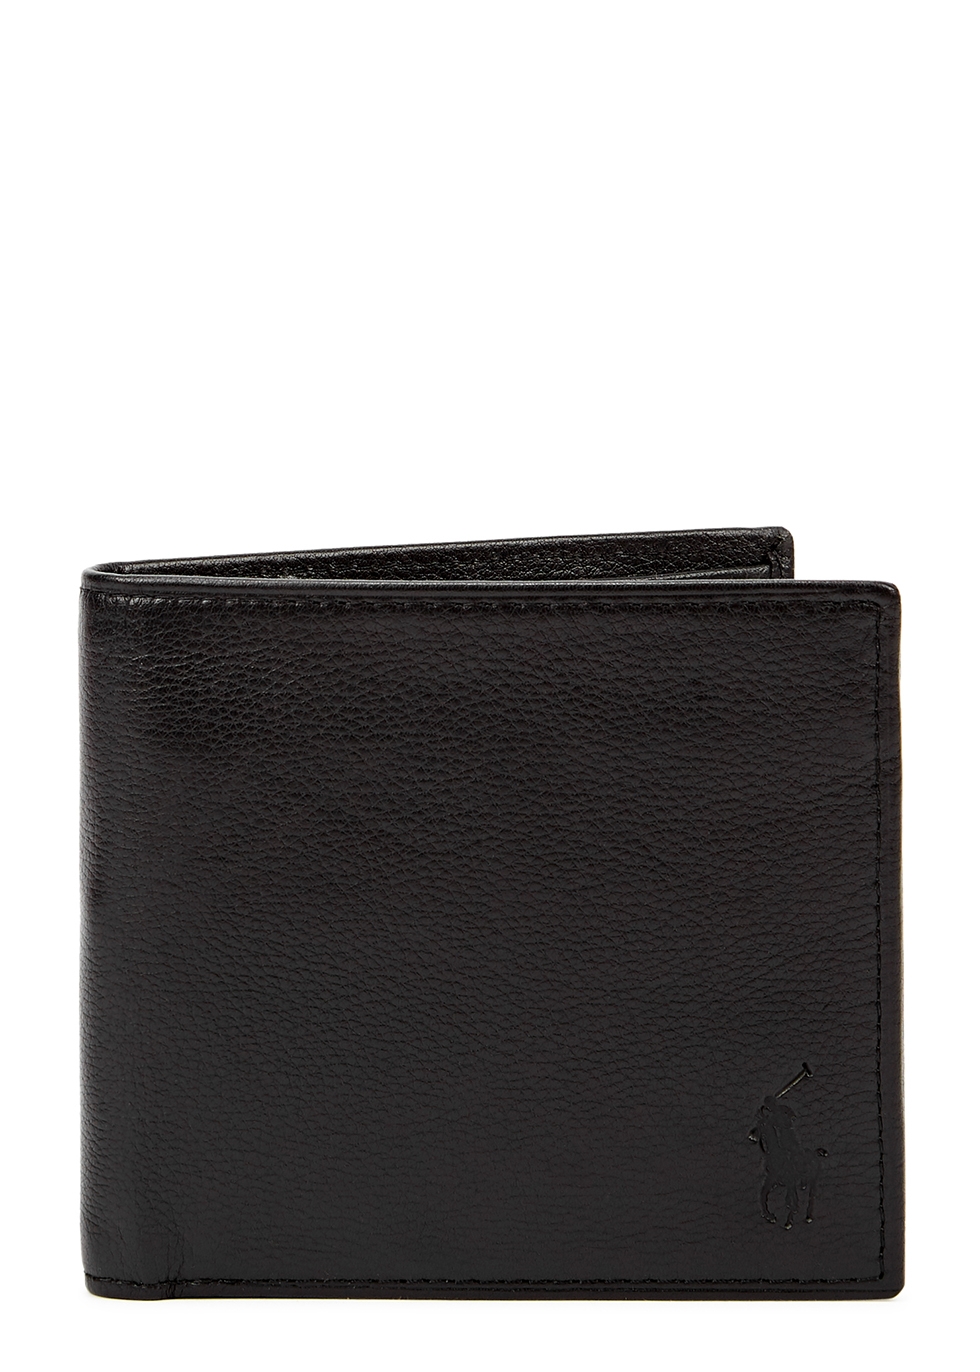 Polo Ralph Lauren Black Logo Leather Wallet